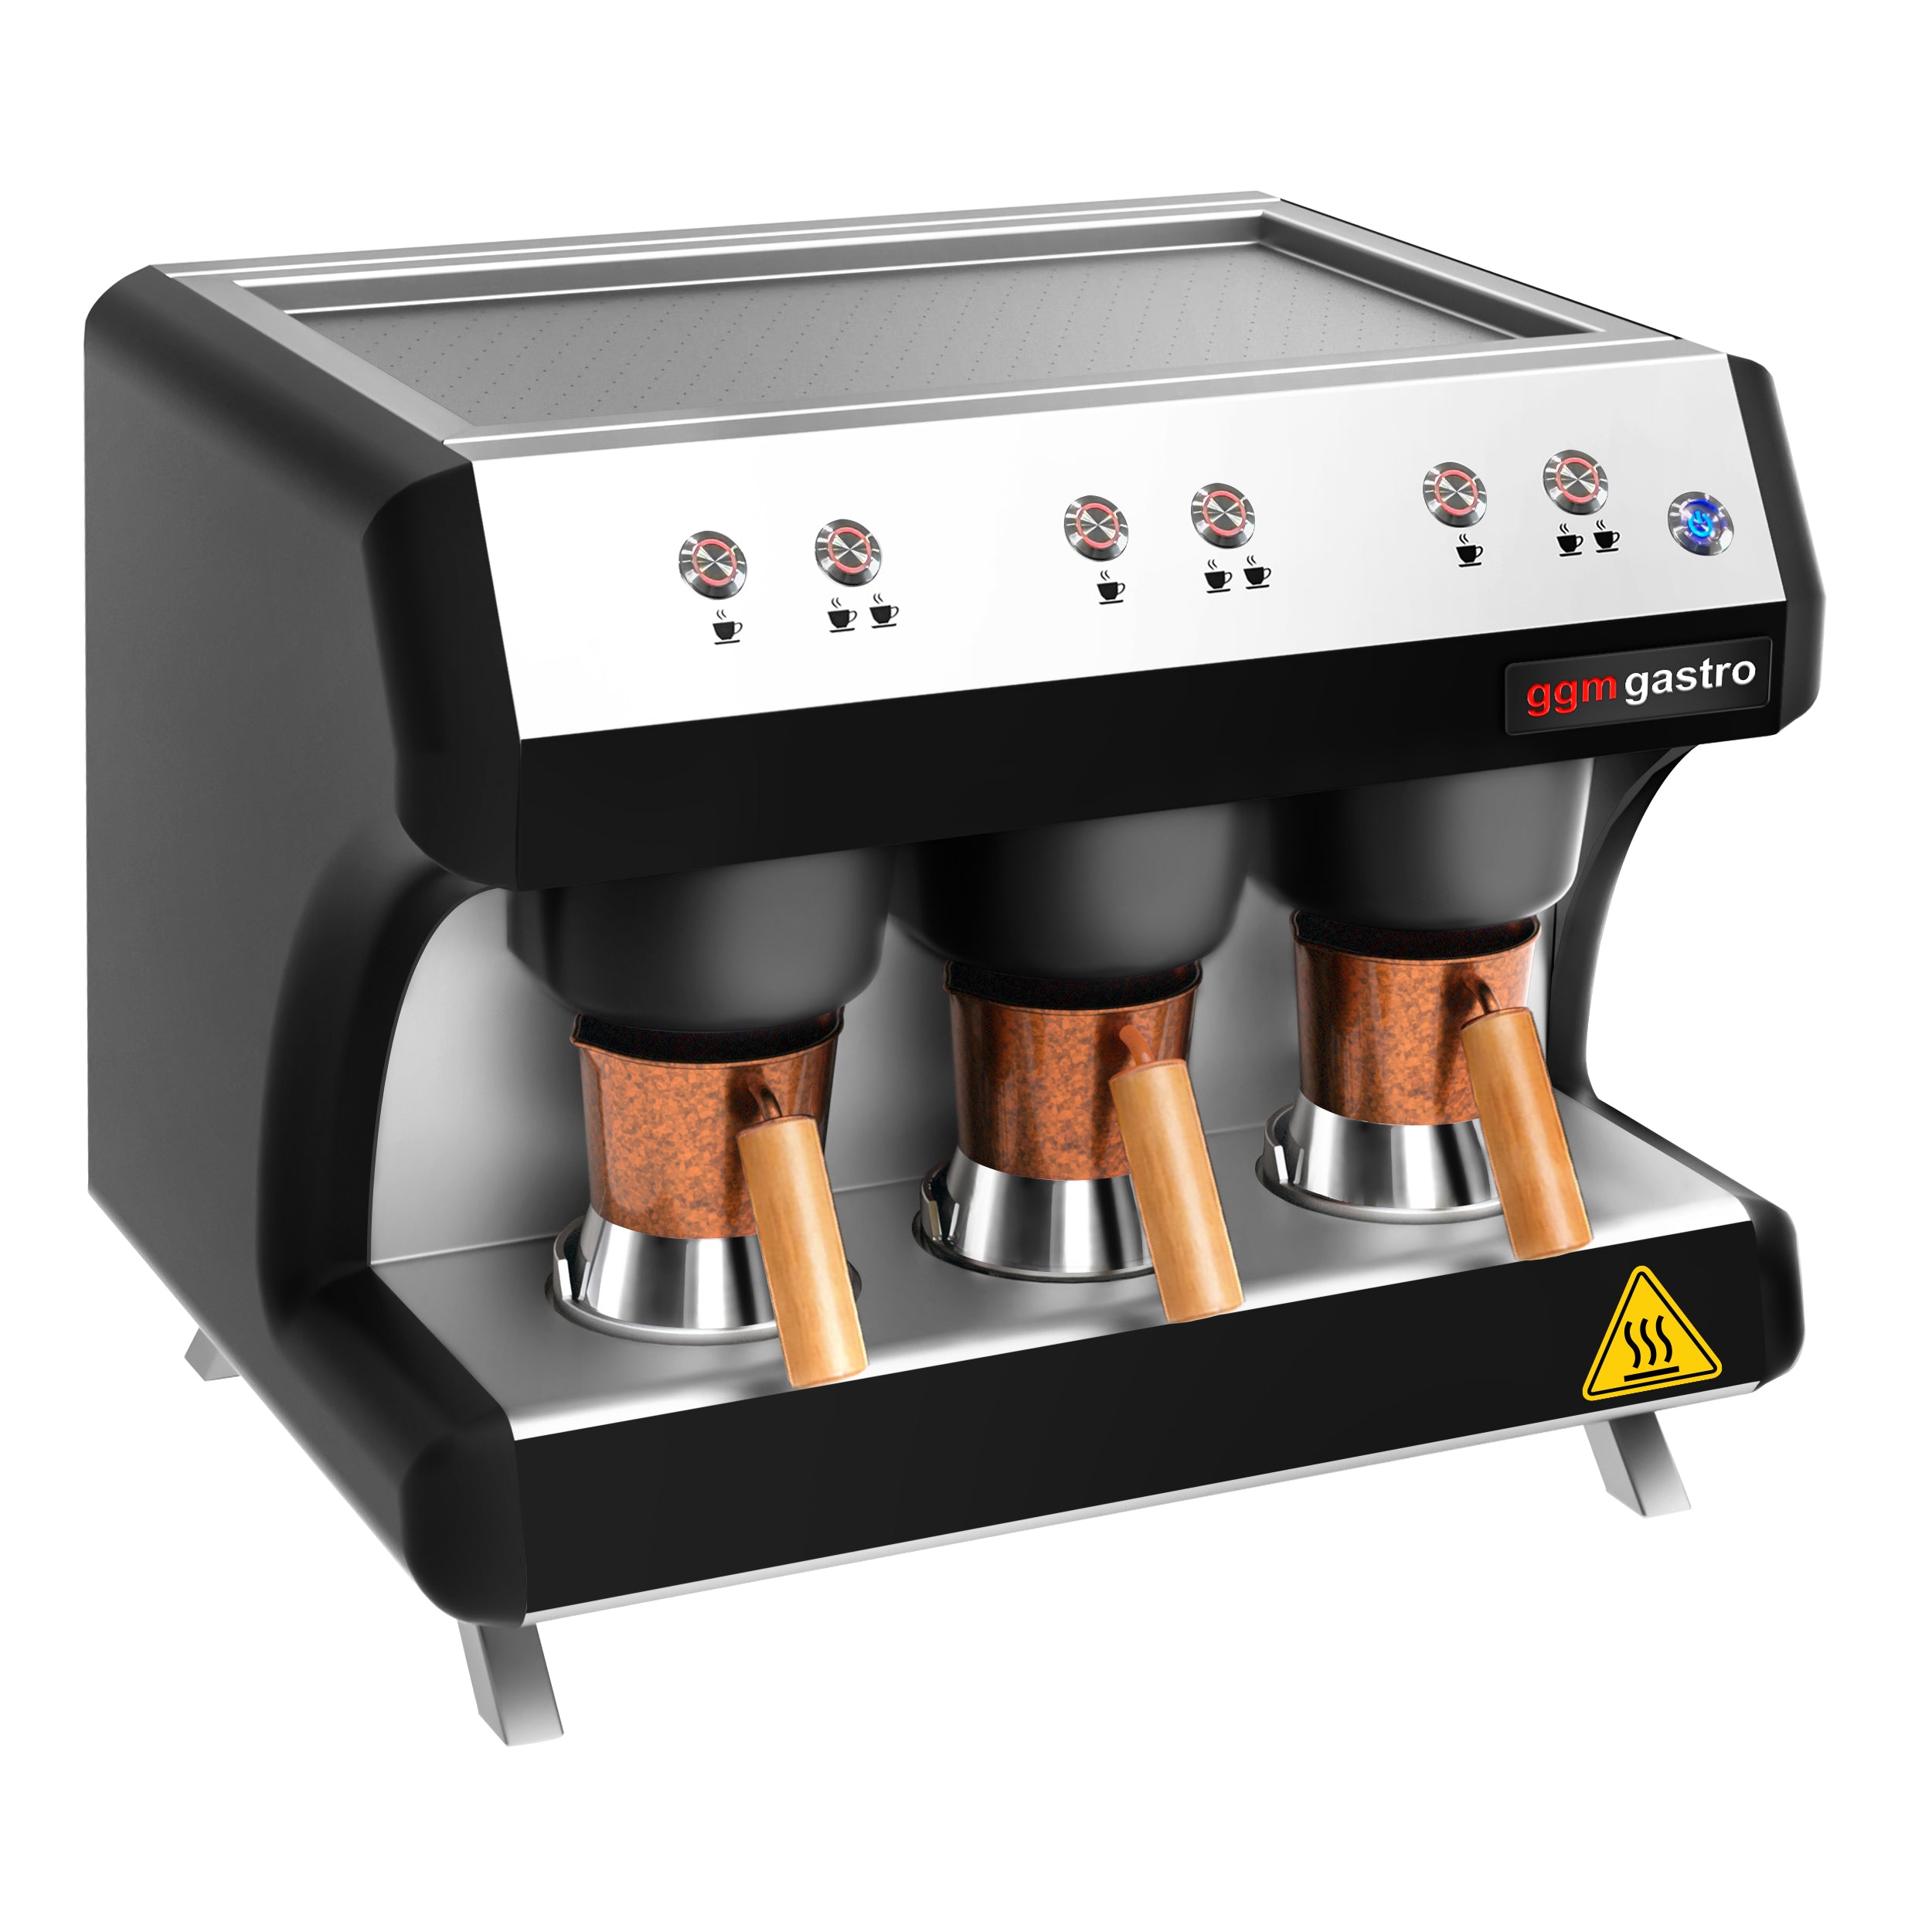 TRIO-maskine til tyrkisk kaffe og mokka